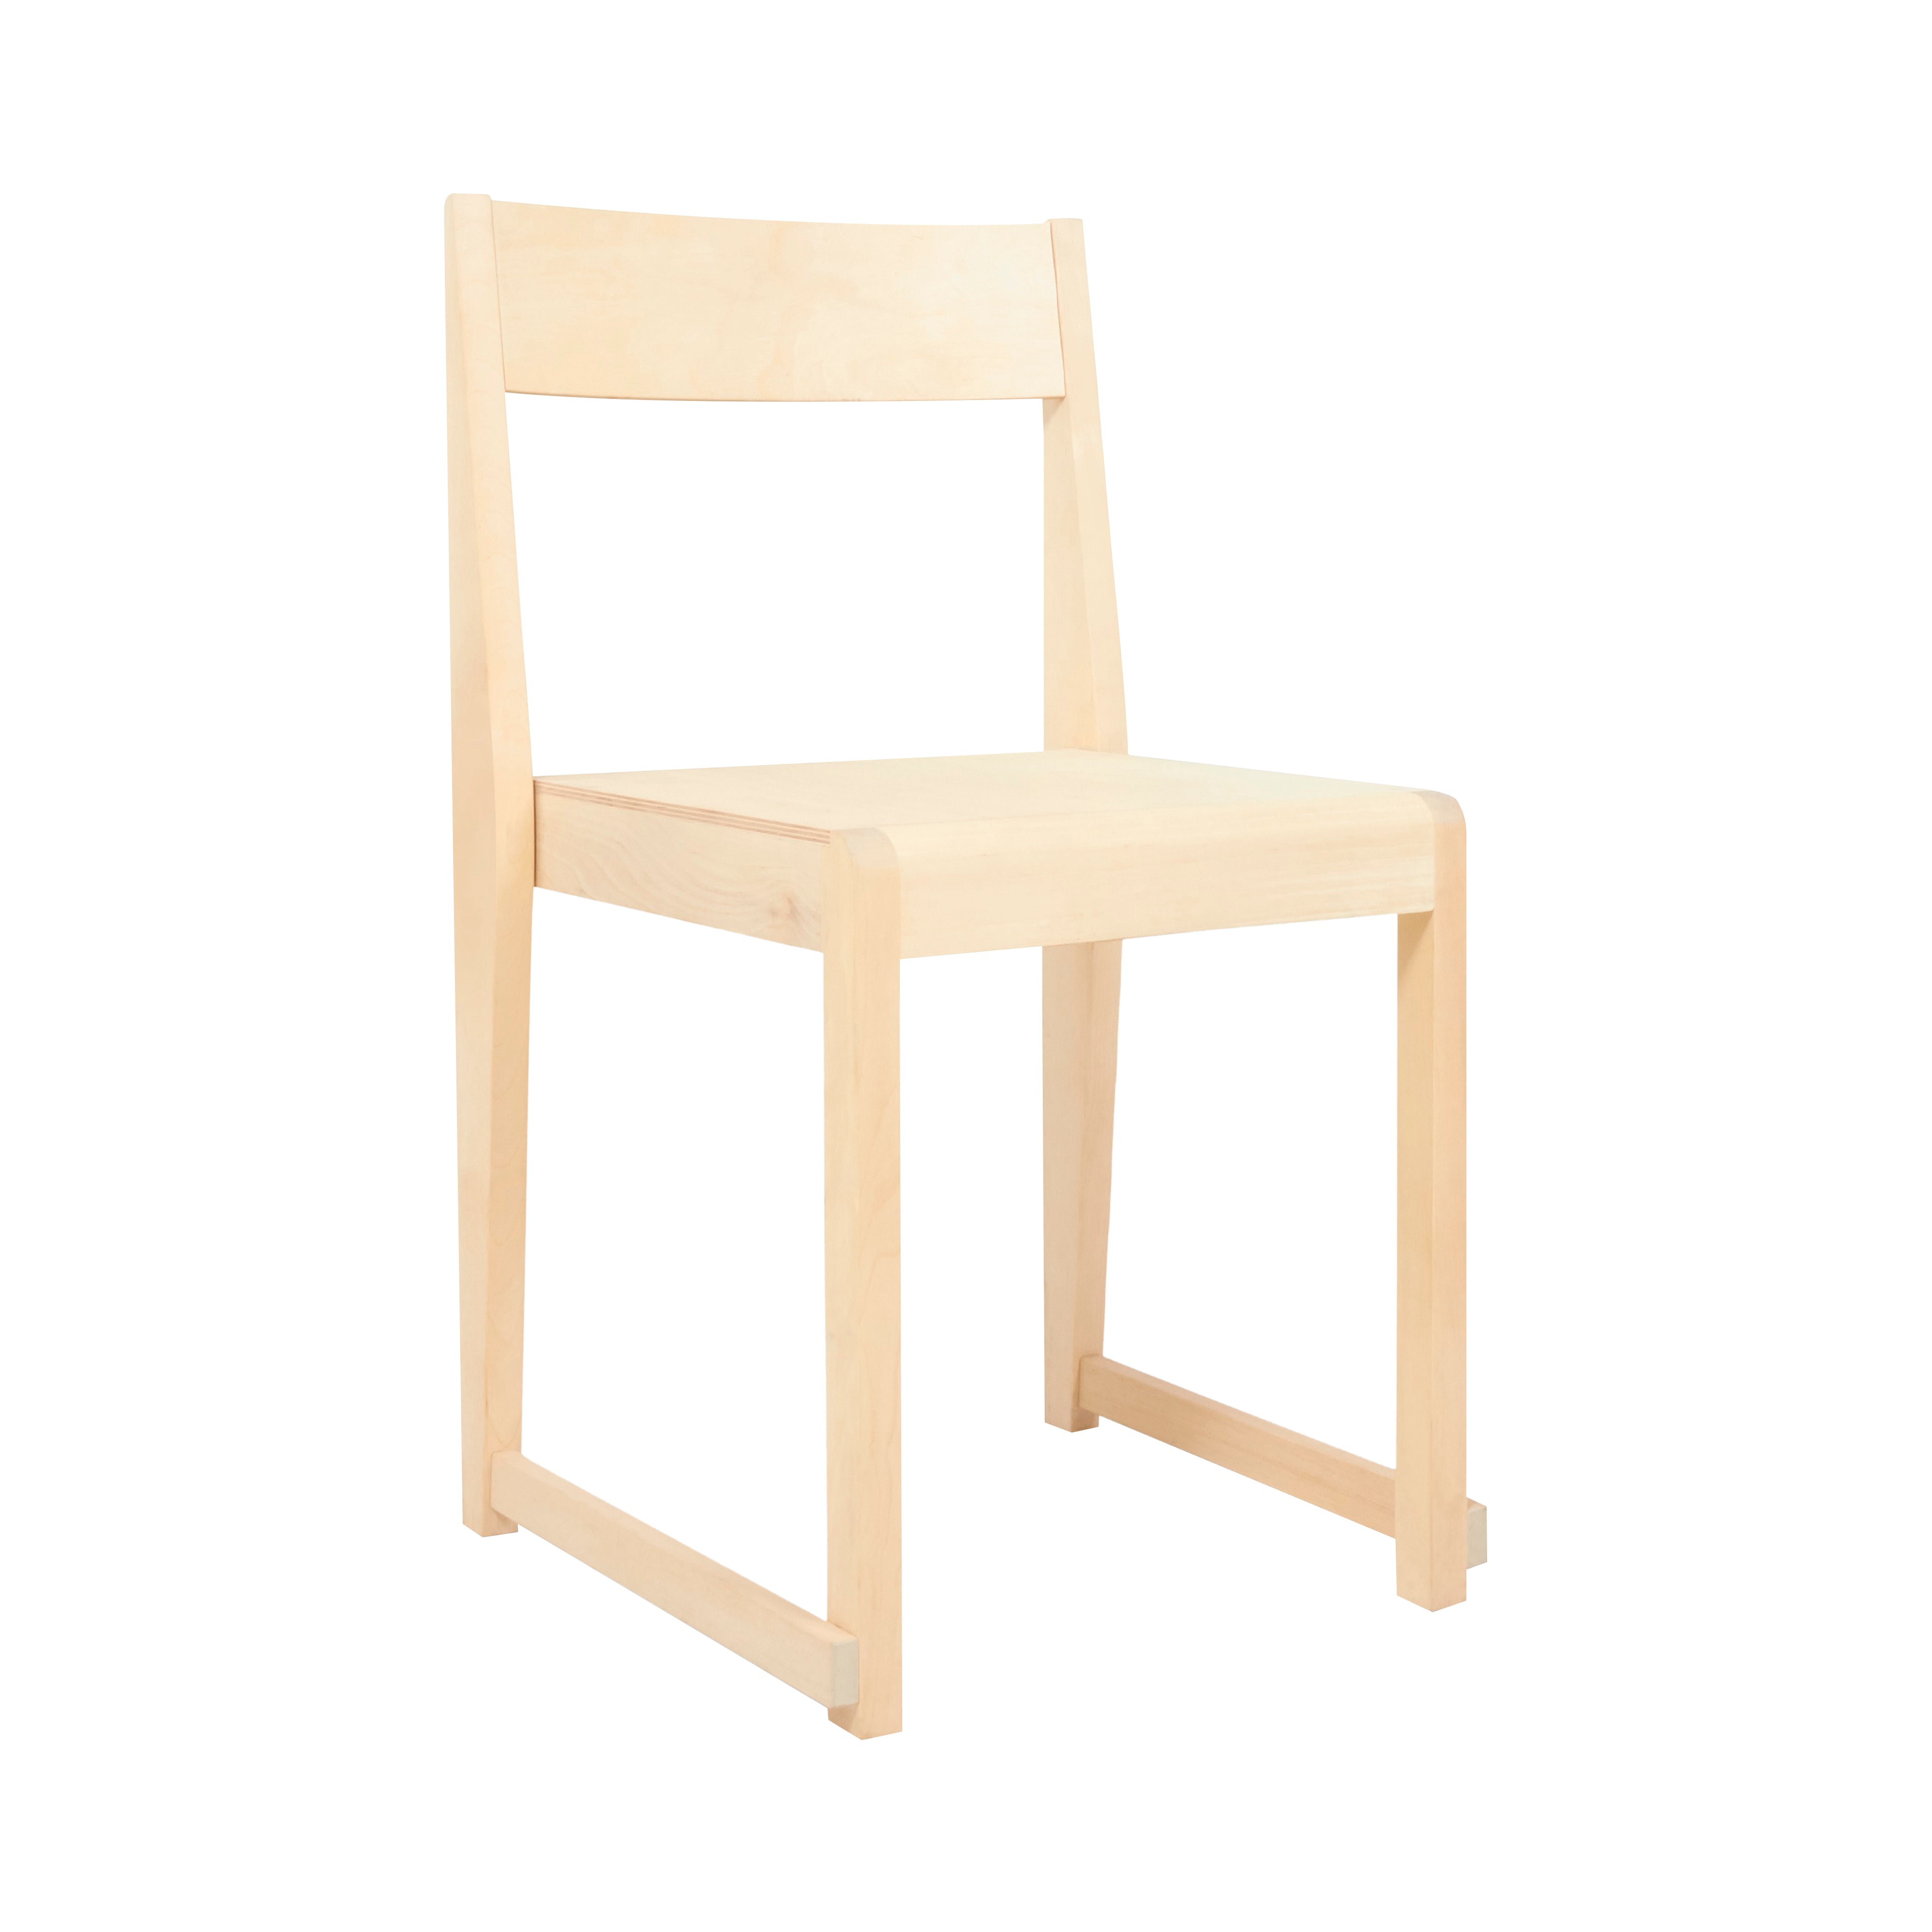 01 Chair: Natural Birch